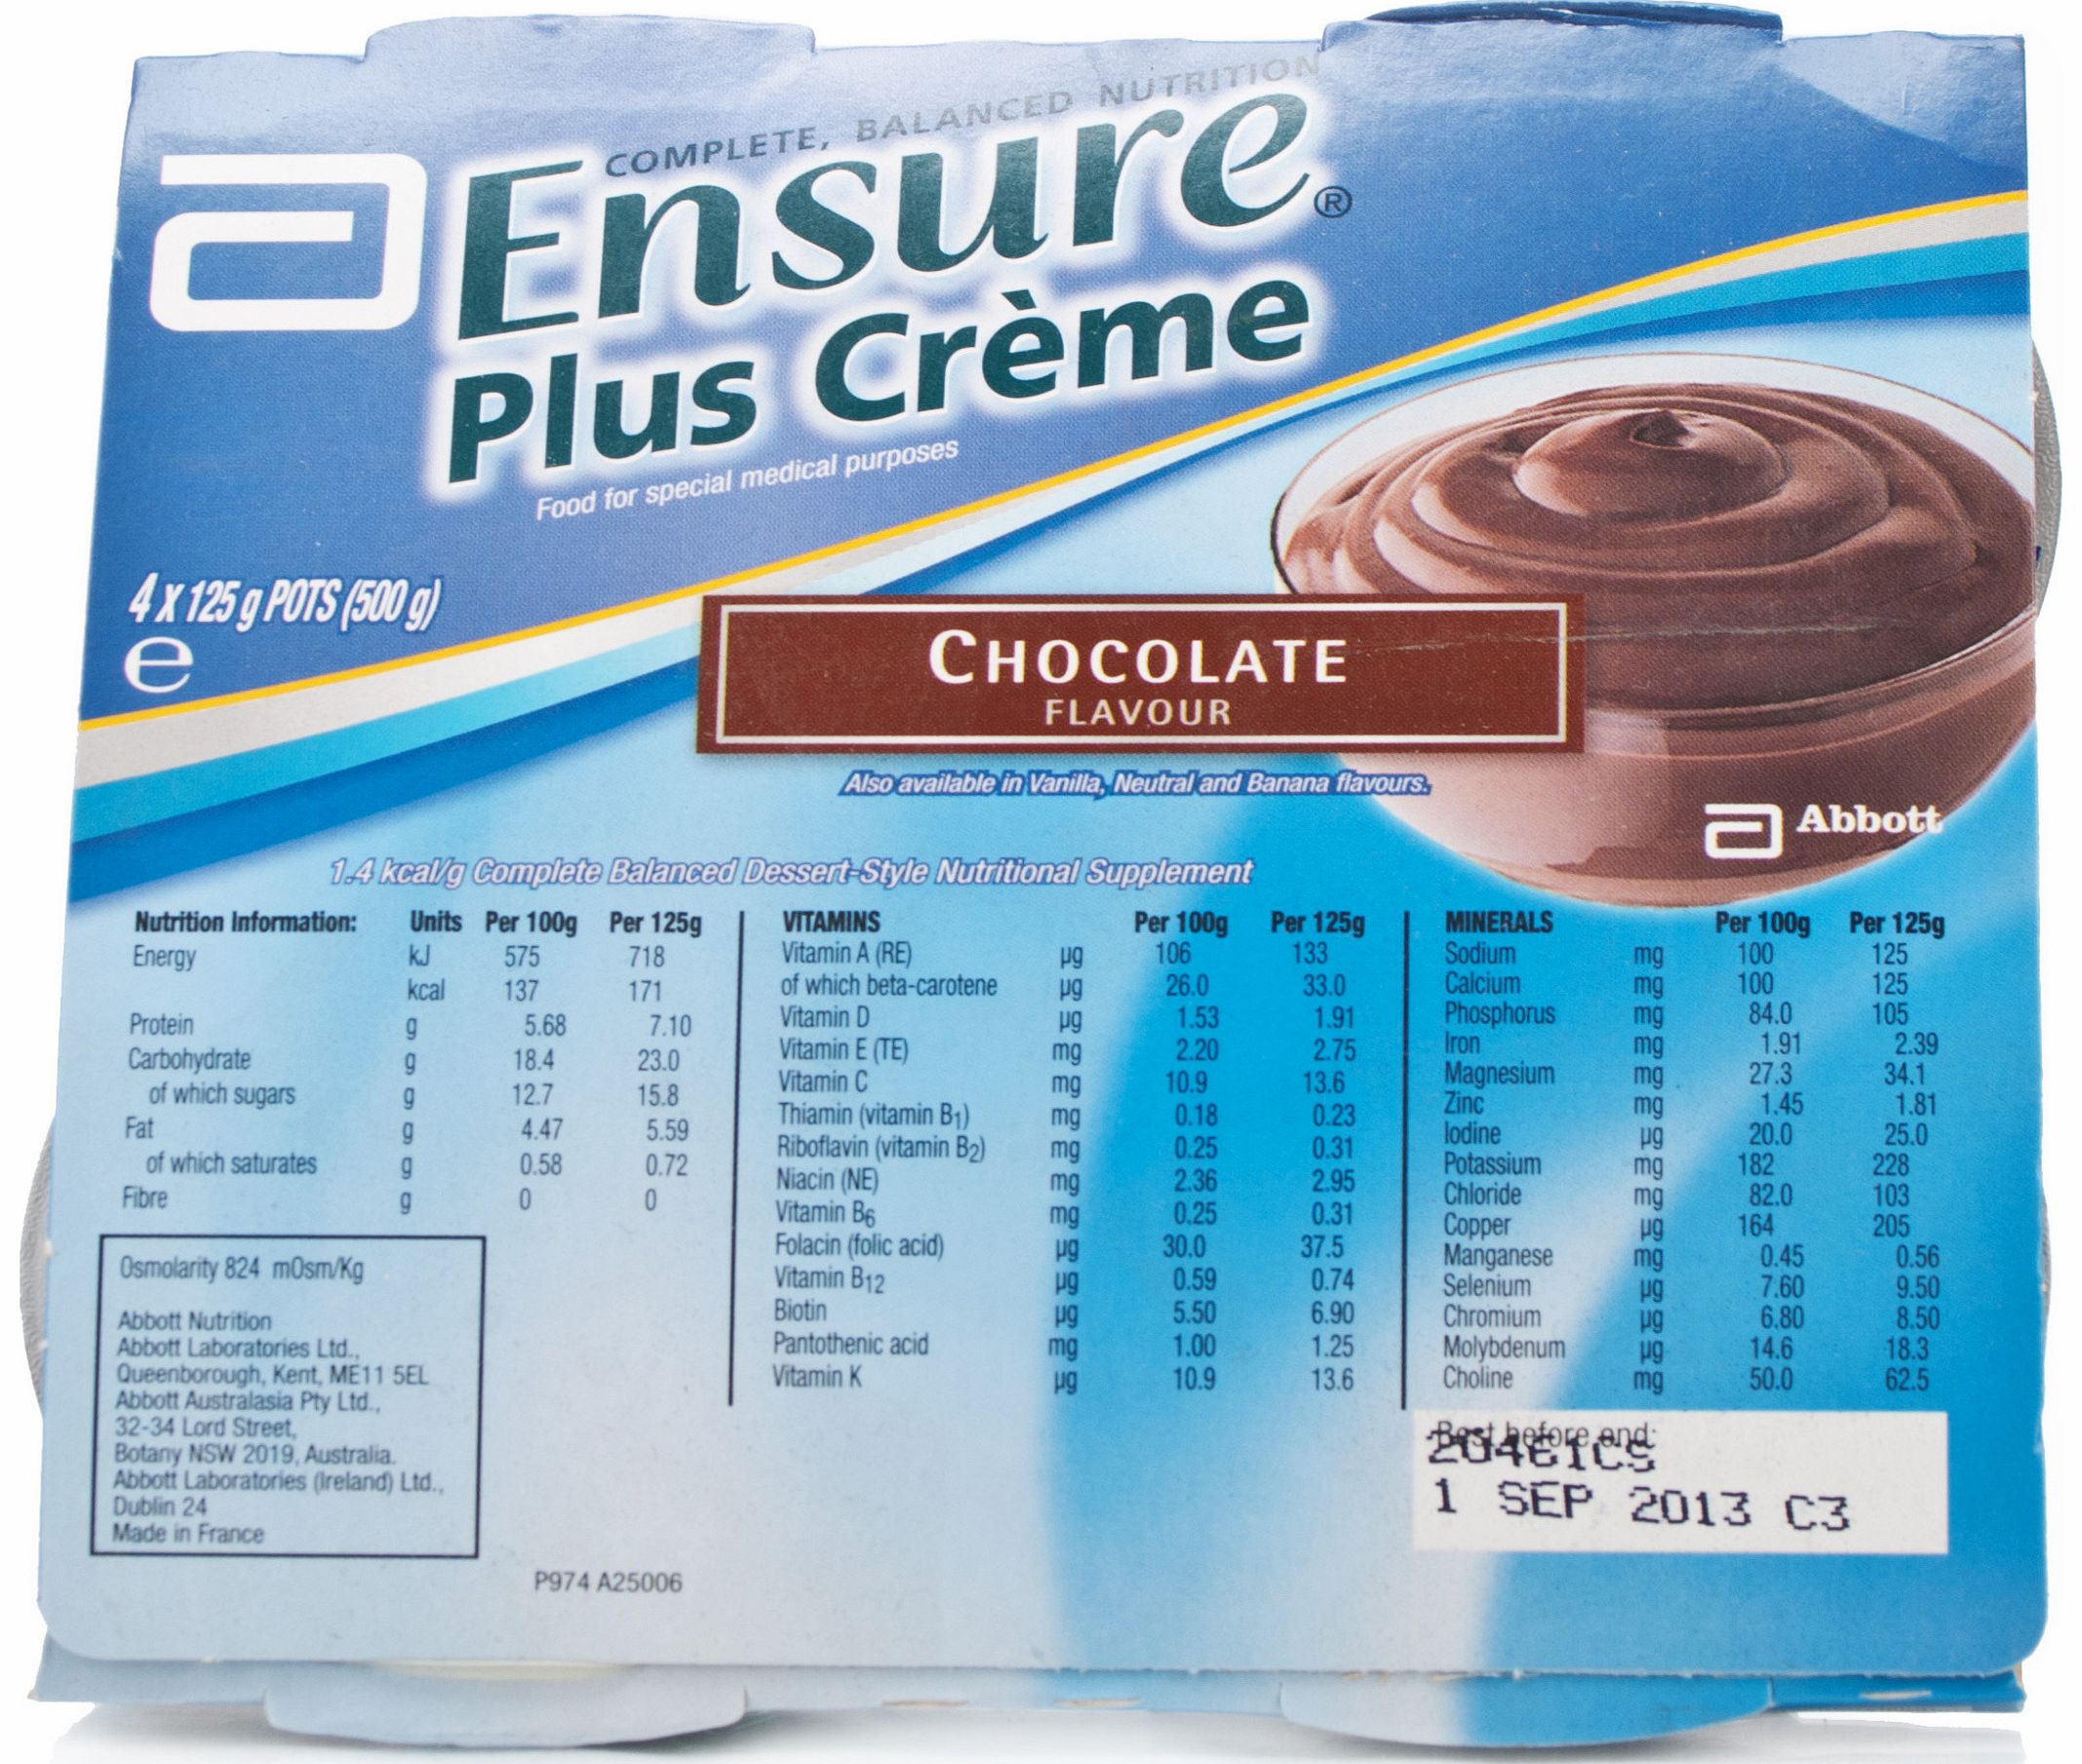 Ensure Plus Creme Chocolate